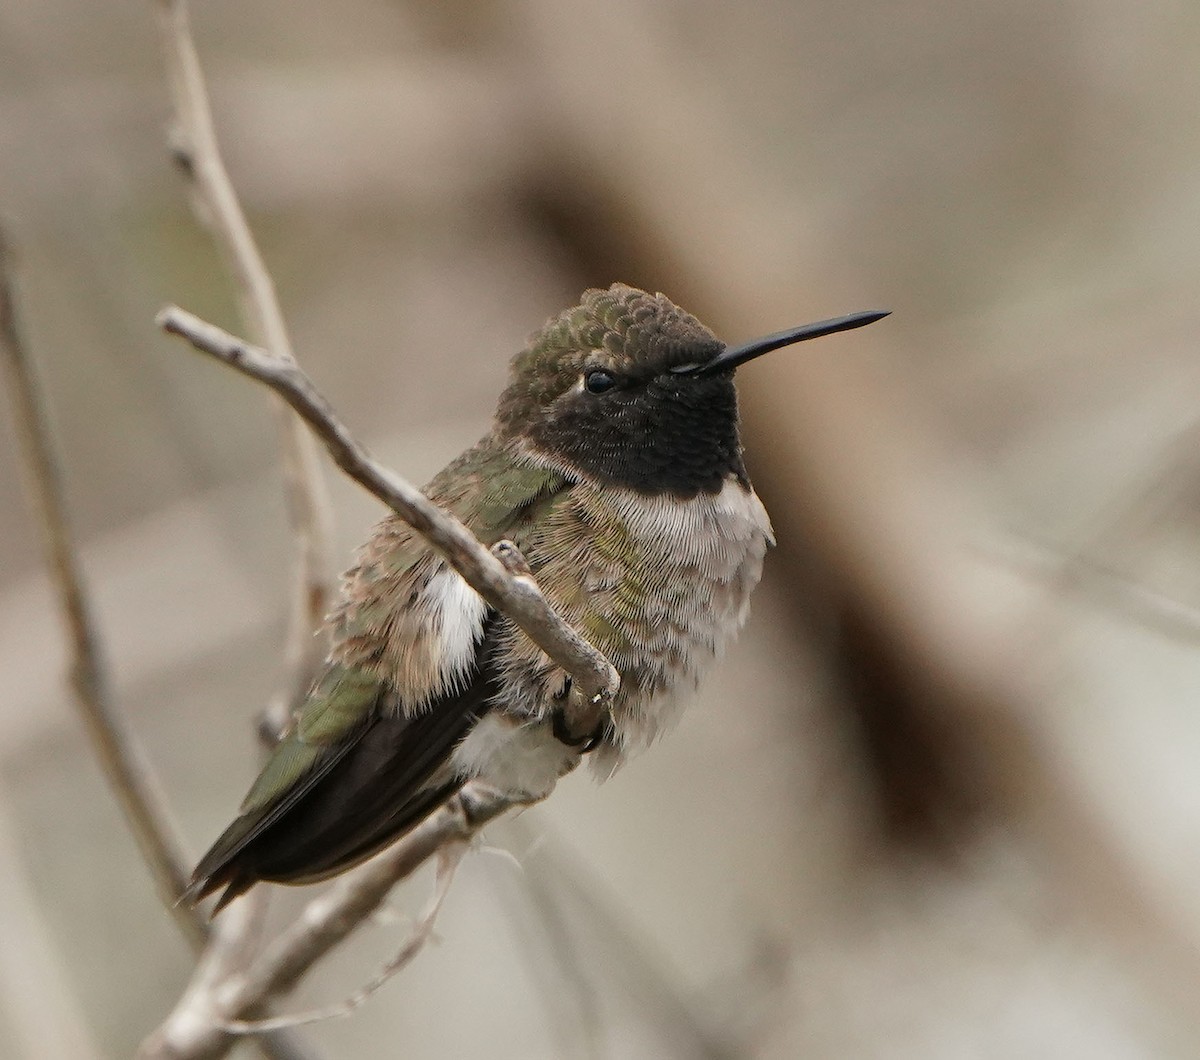 Black-chinned Hummingbird - Cathy Sheeter